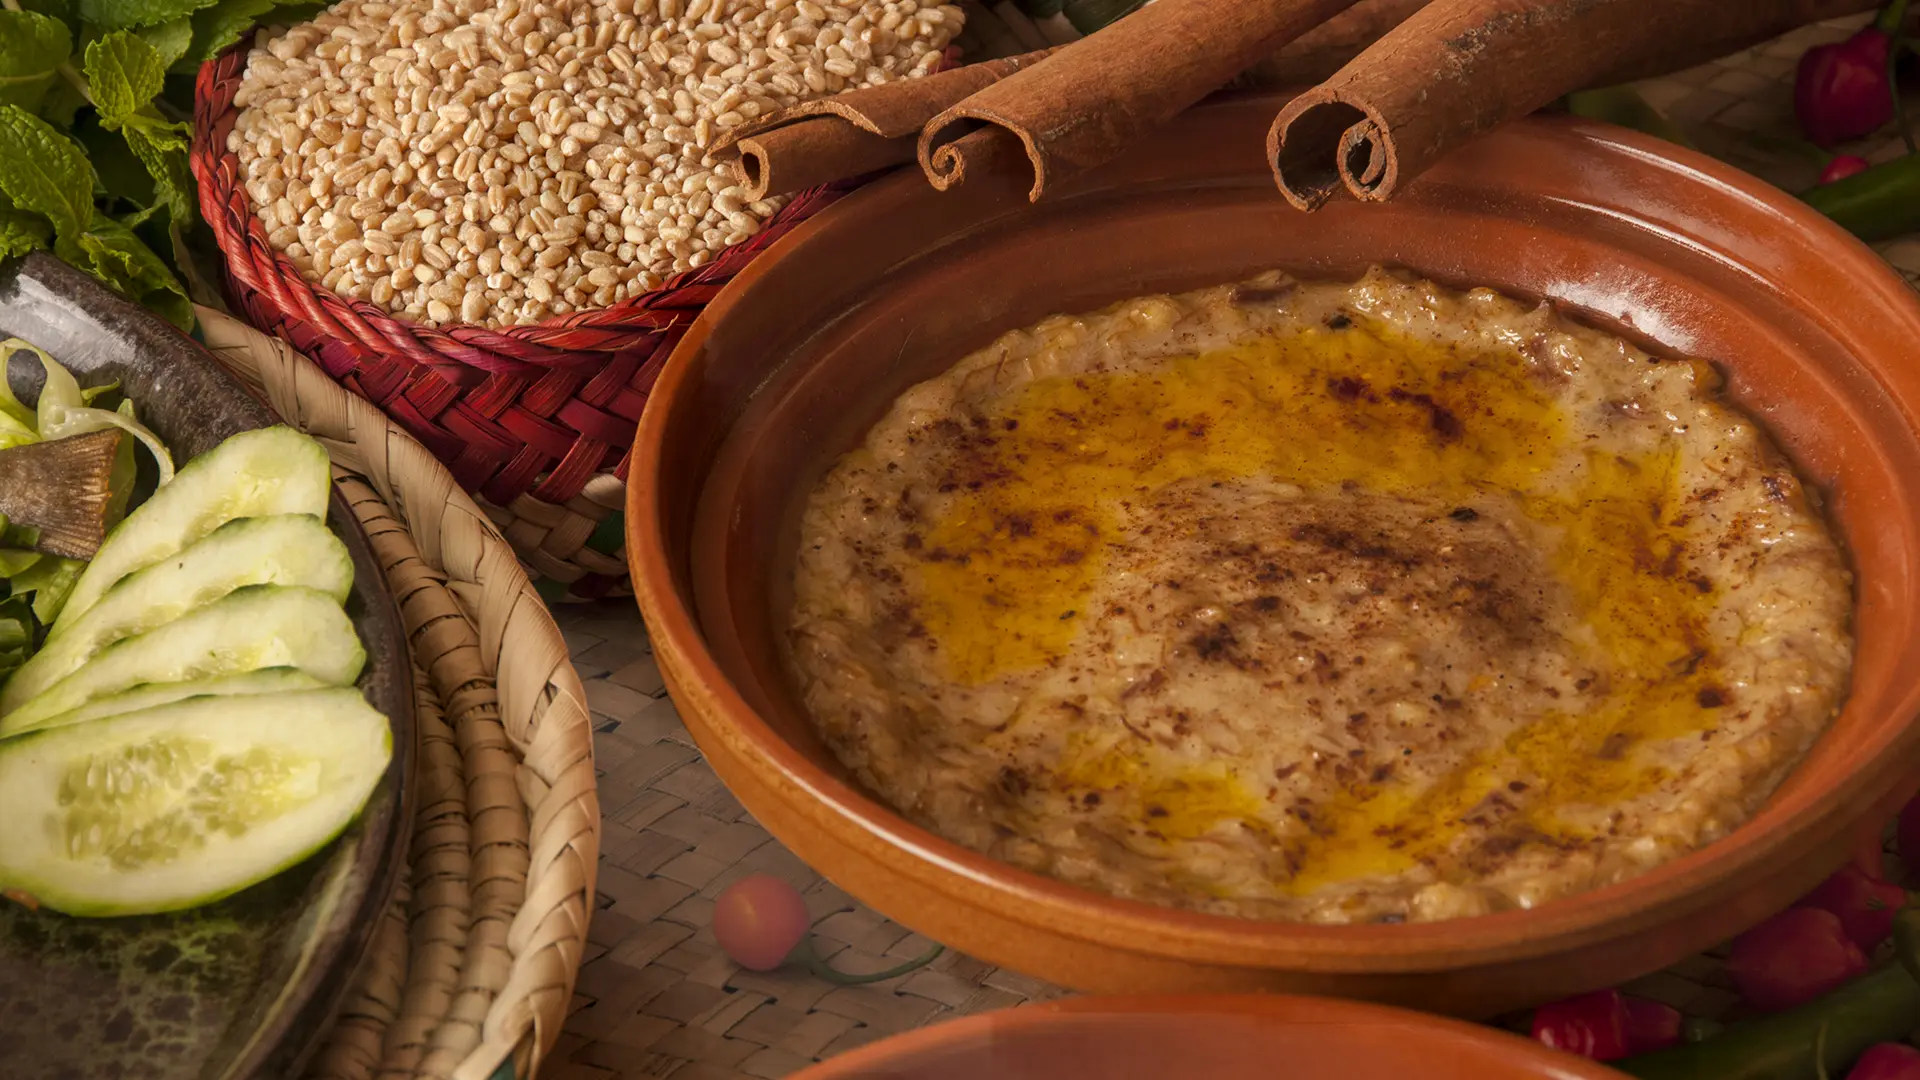 Diez comidas típicas para probar en un viaje a Catar